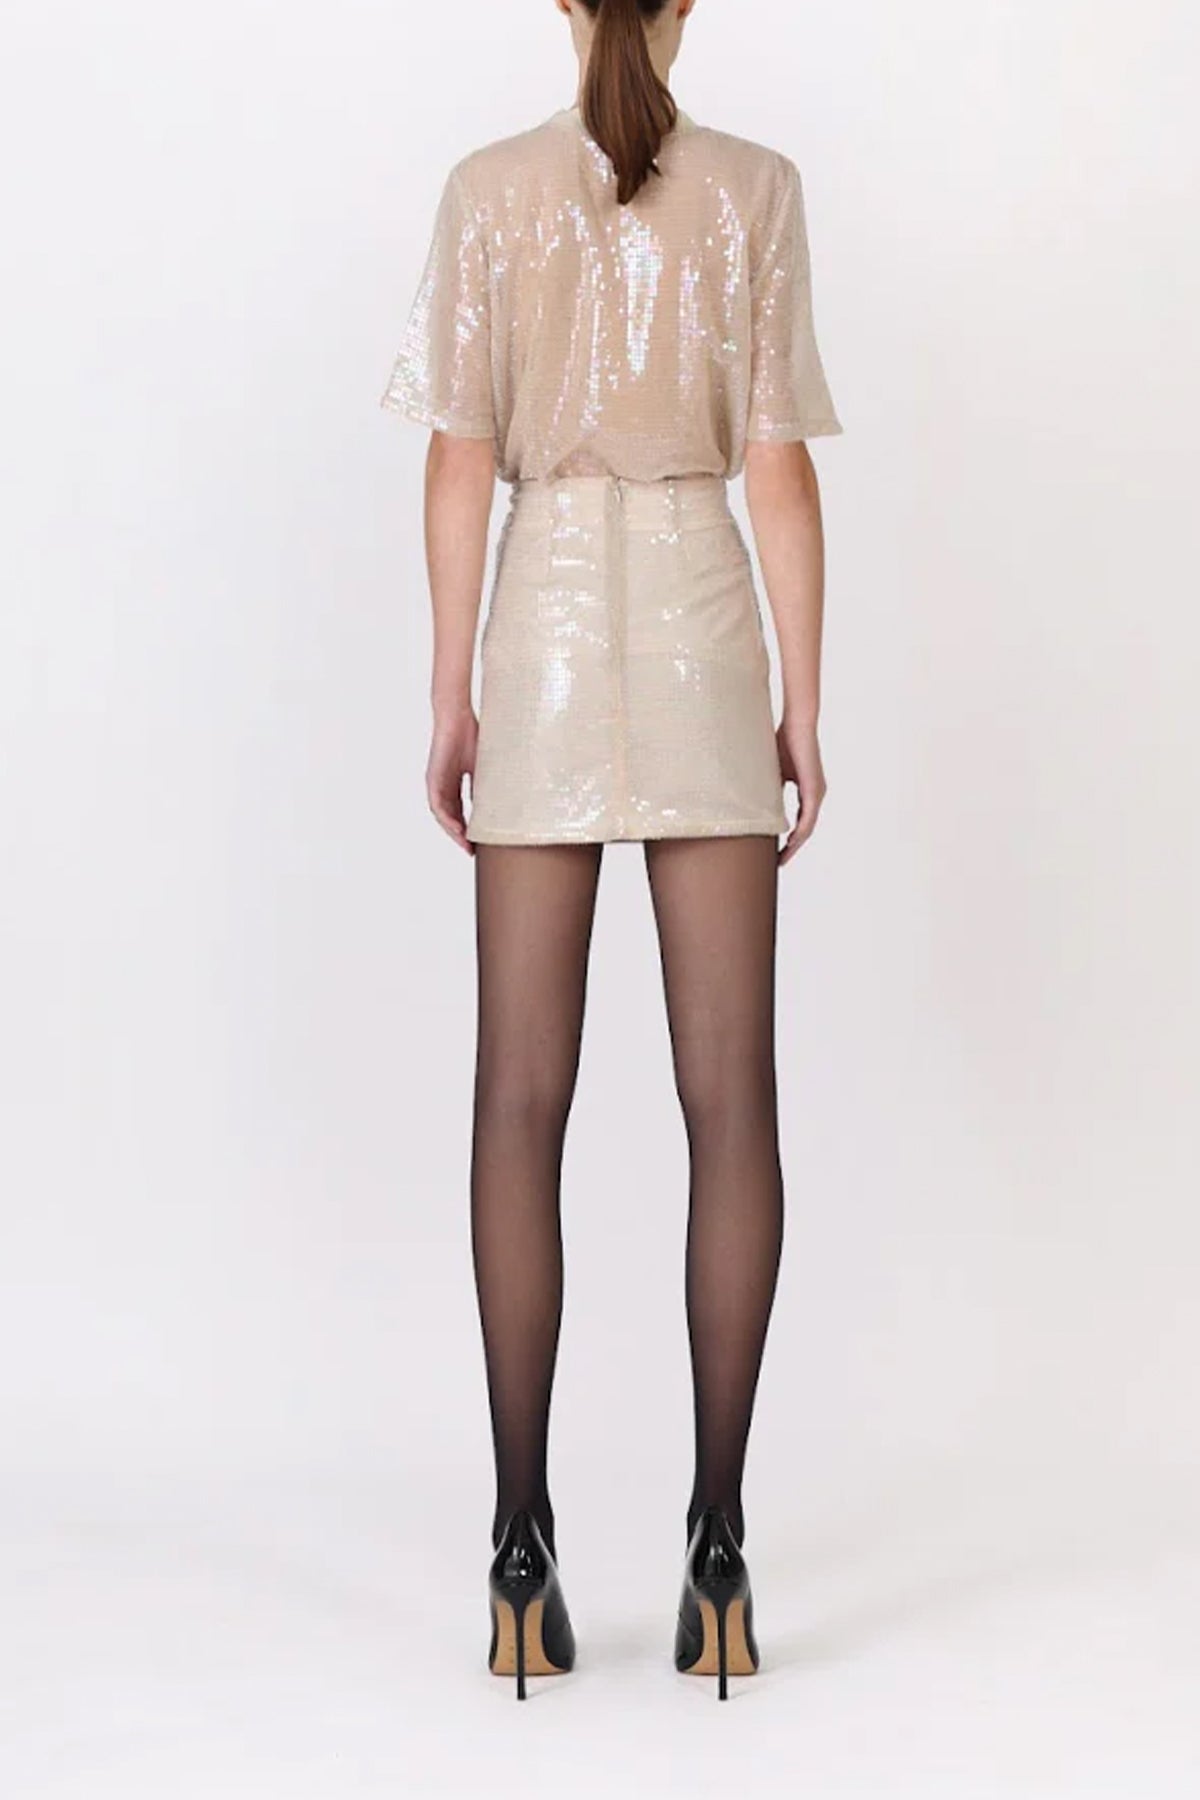 Valerie Sequin Skirt in Blush - shop-olivia.com